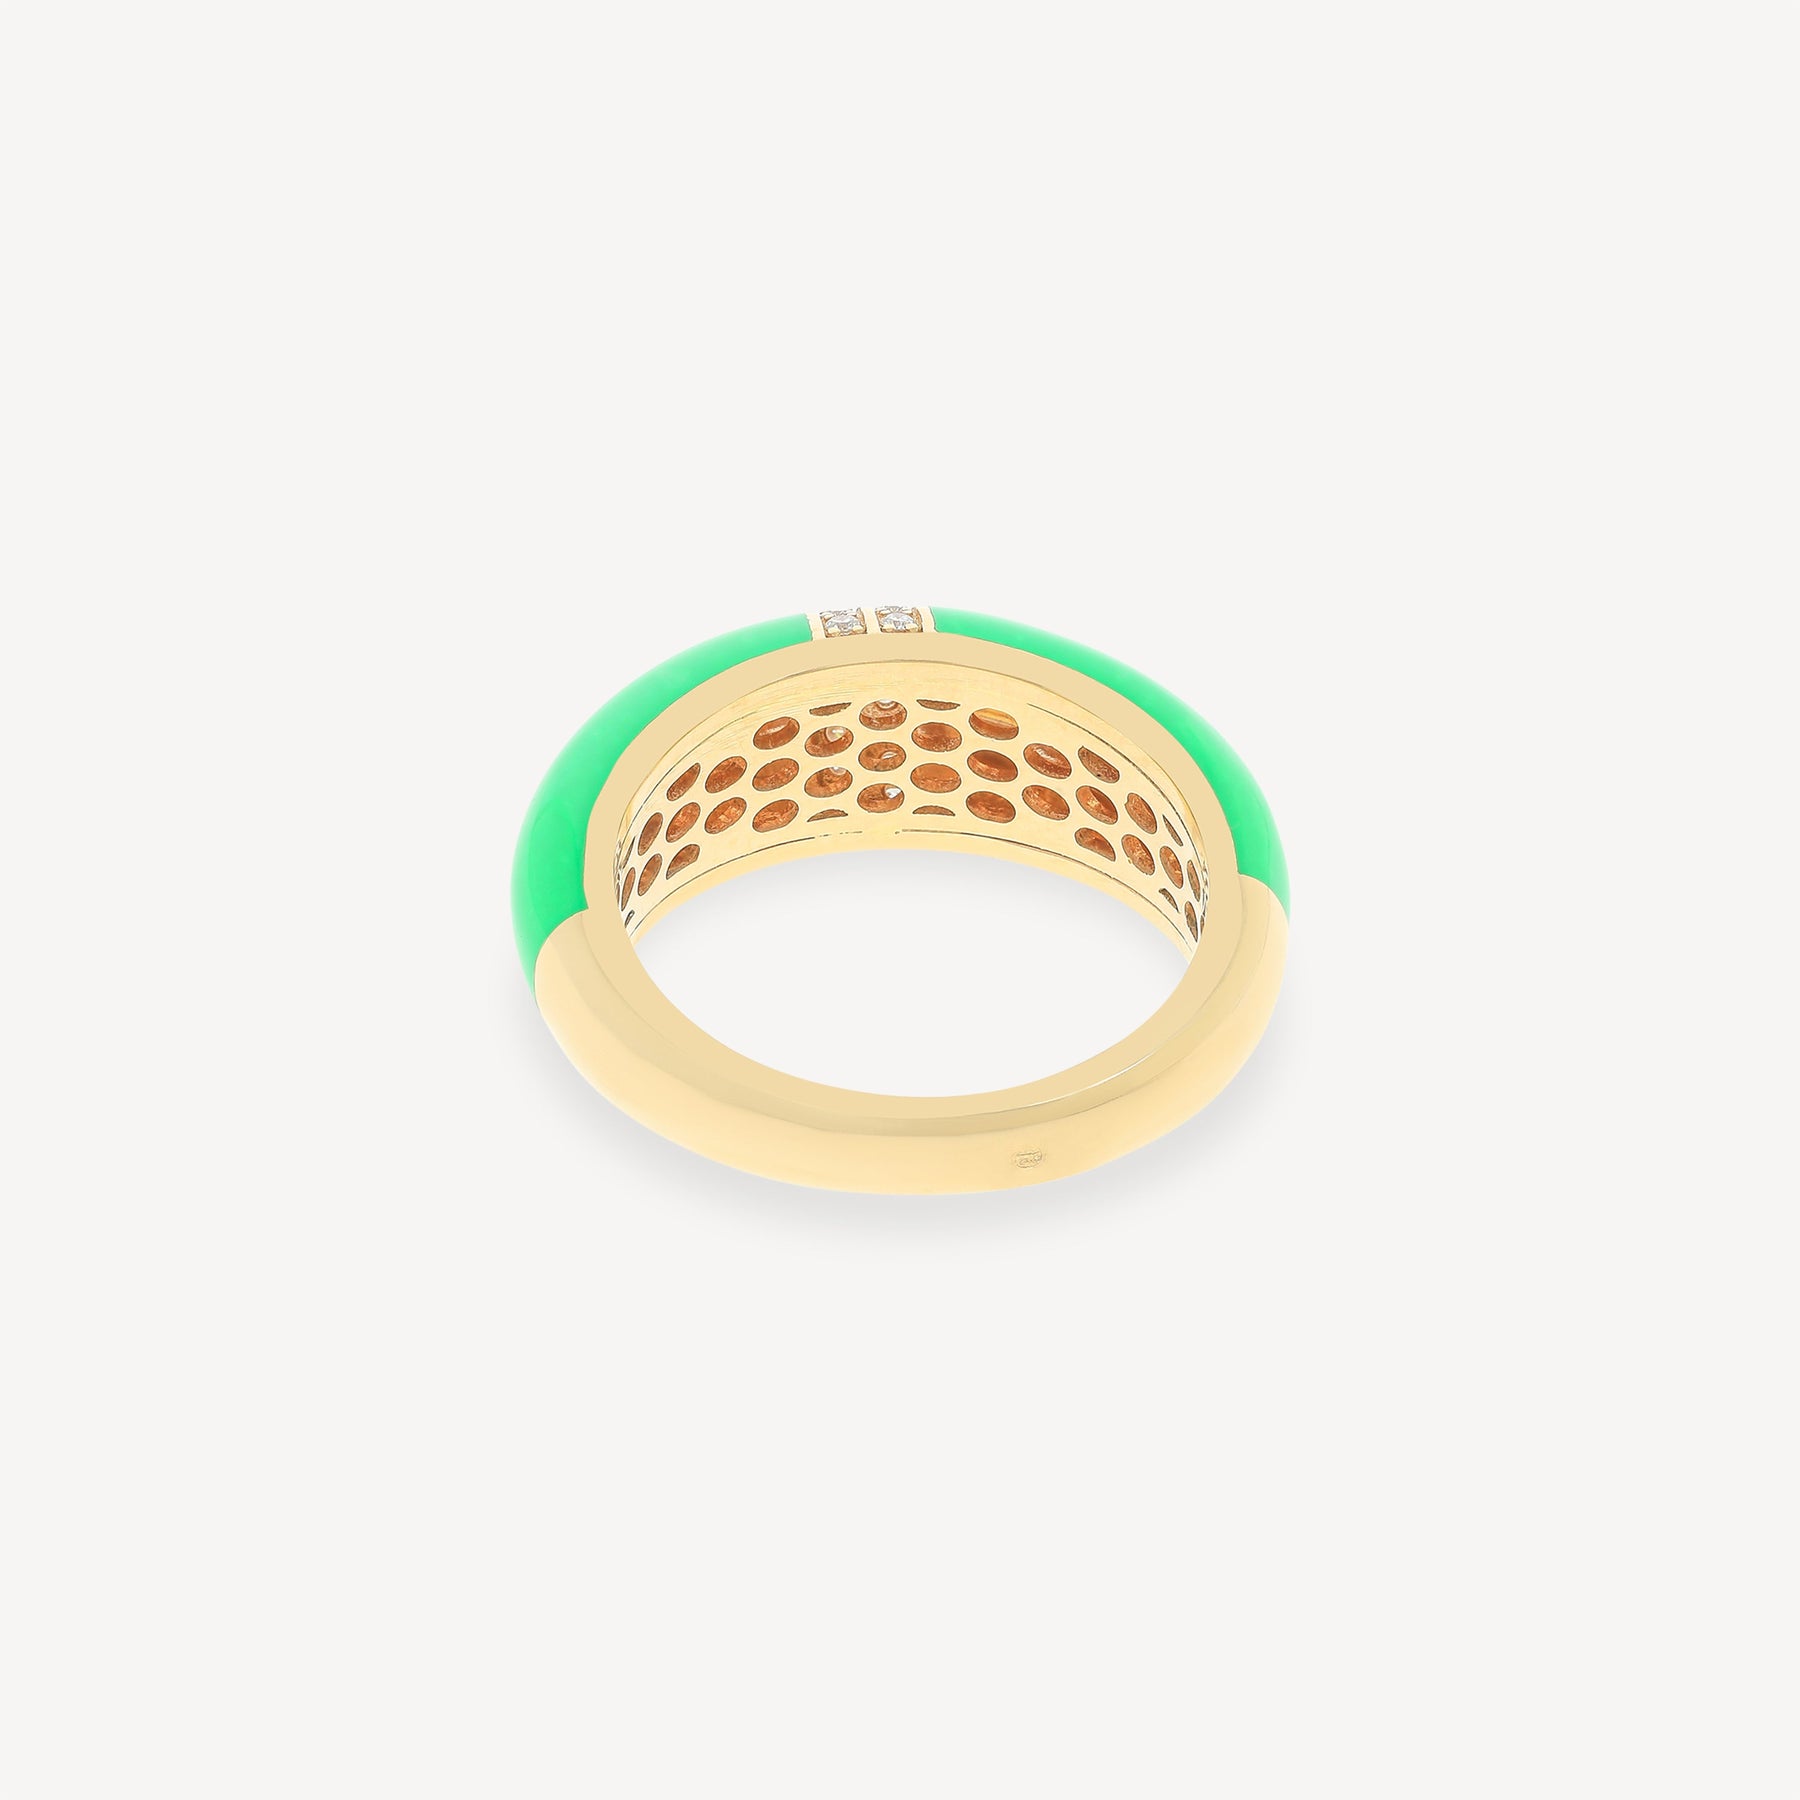 Modernity Green Ring